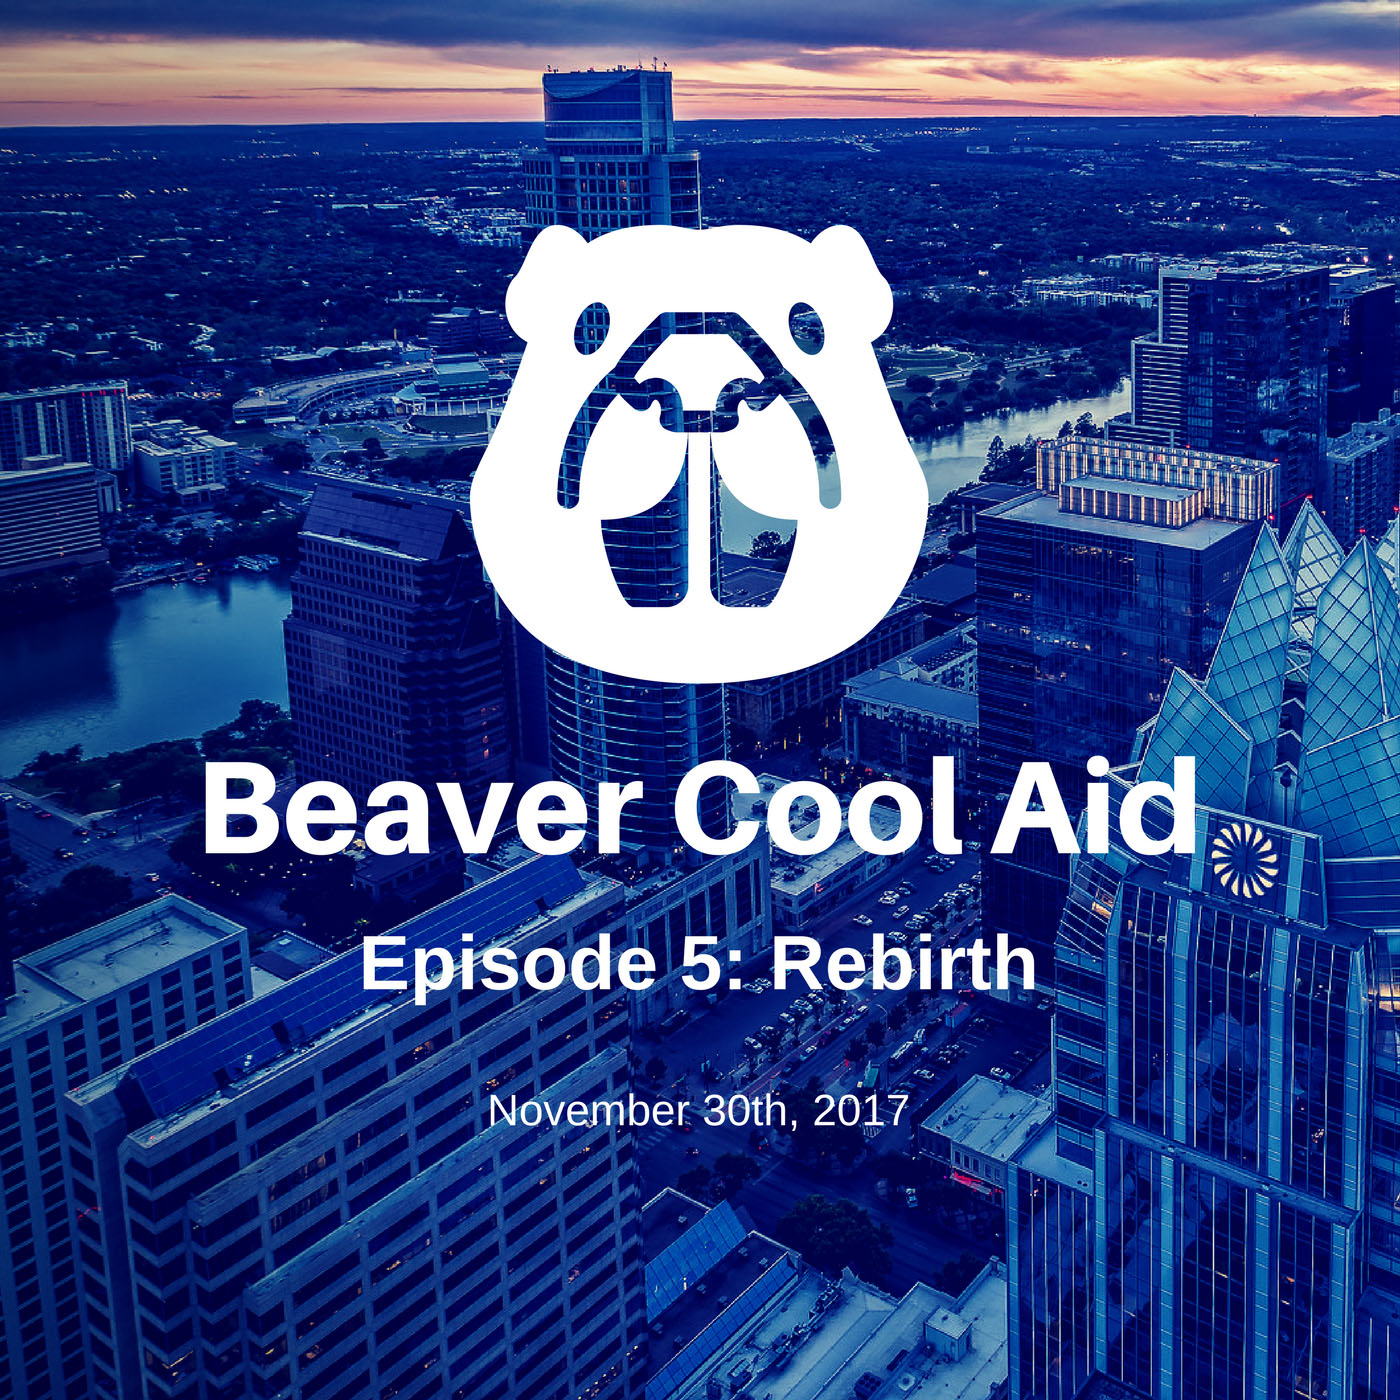 Beaver Cool Aid Episode 5: Rebirth